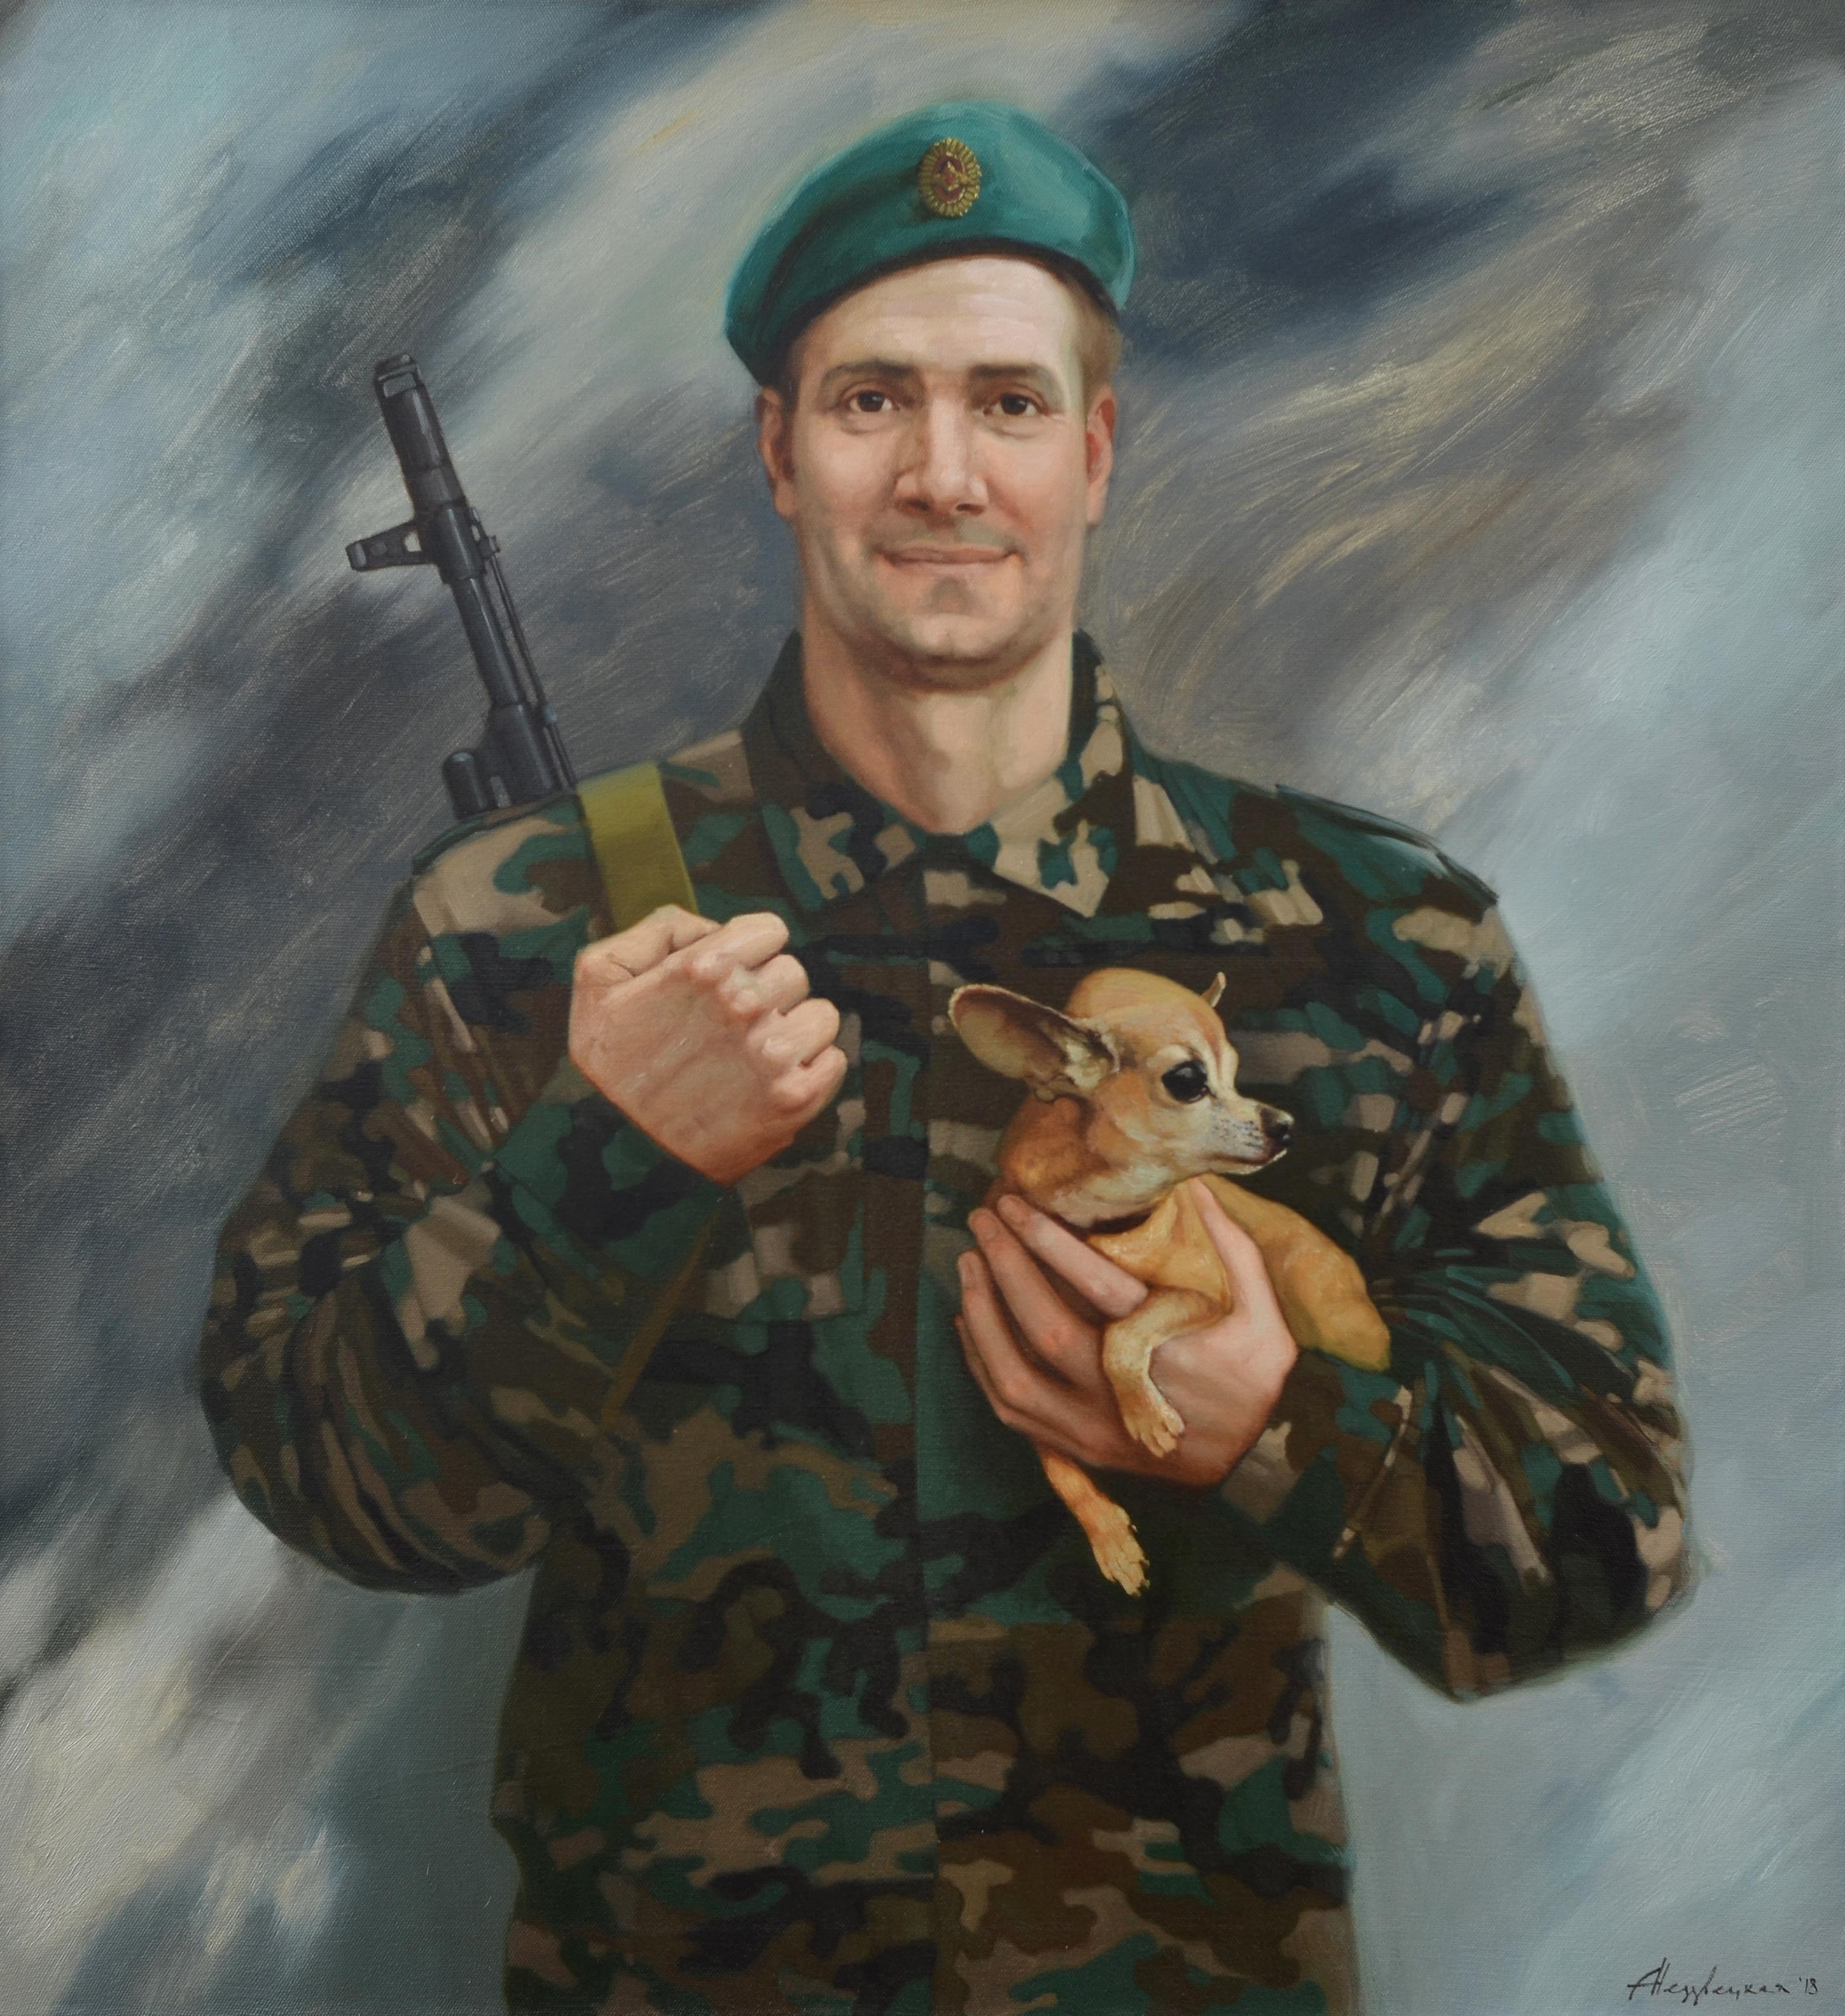 Border guard with a dog. Original modern art painting